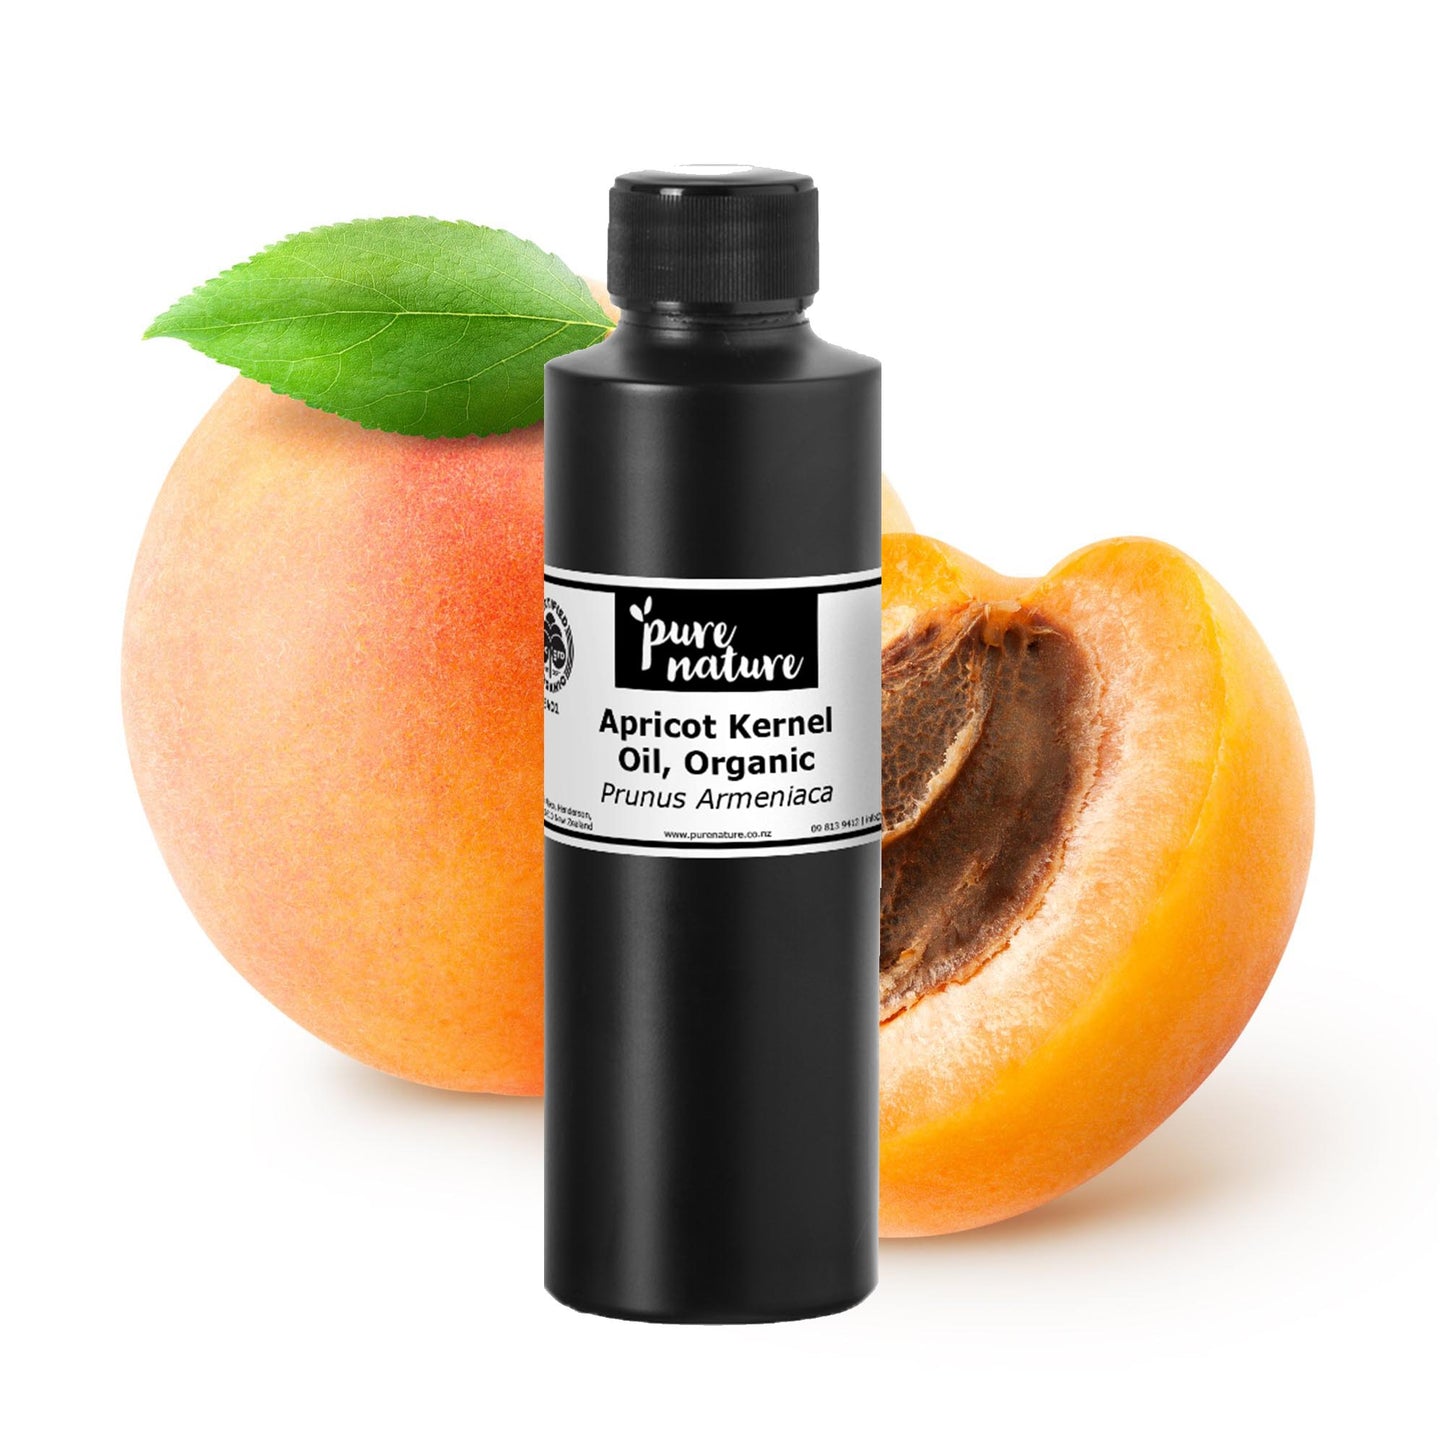 Apricot Kernel Oil, Organic